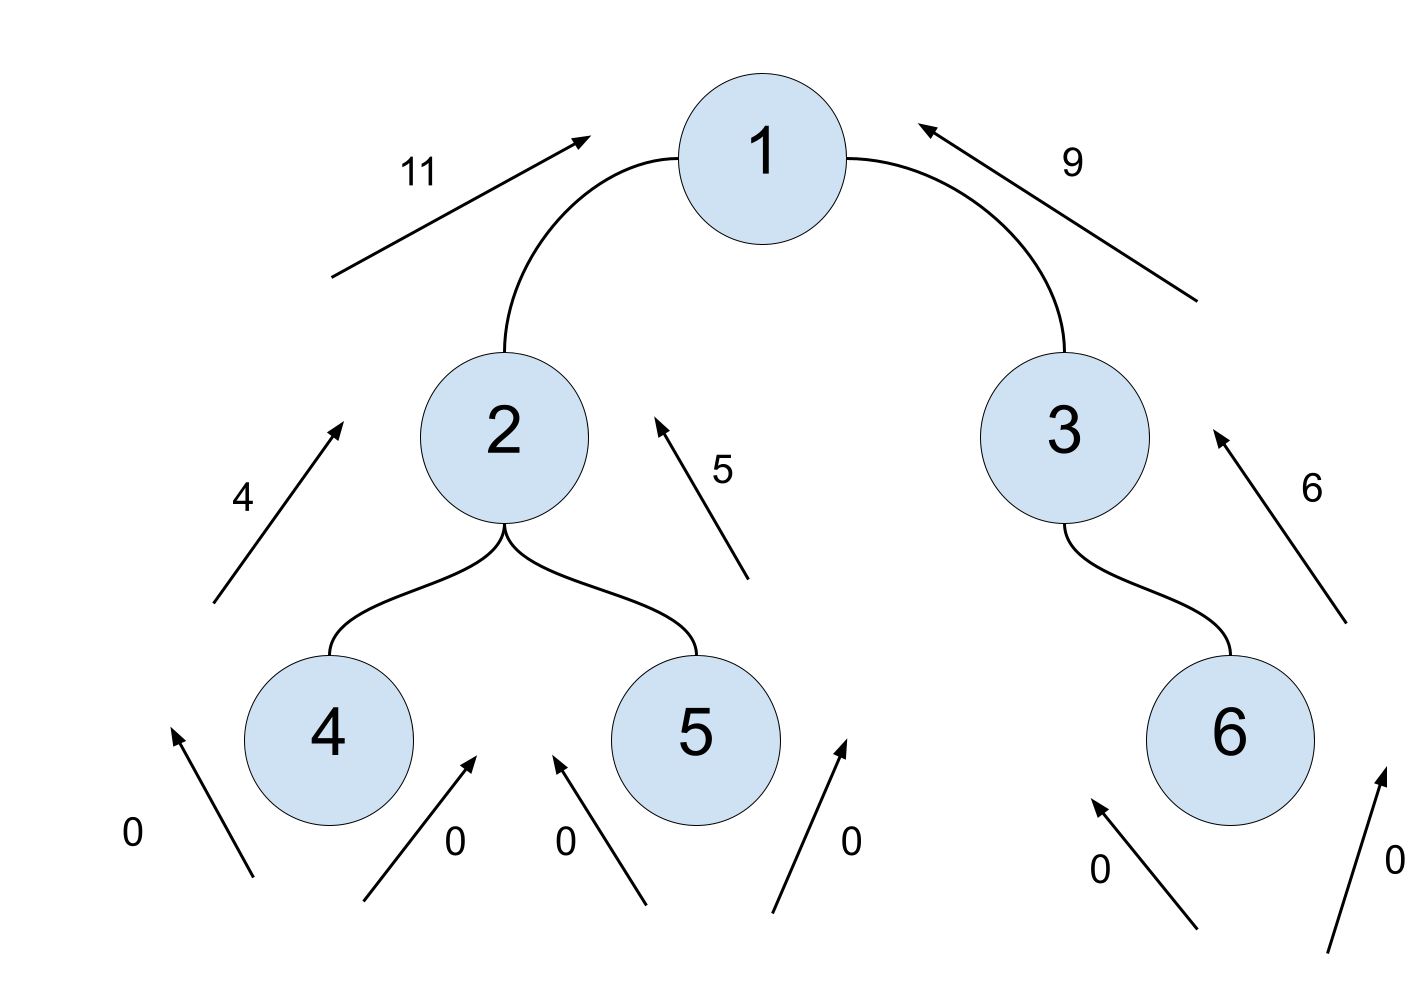 Maximum Product of Splitted Binary Tree LeetCode Solution